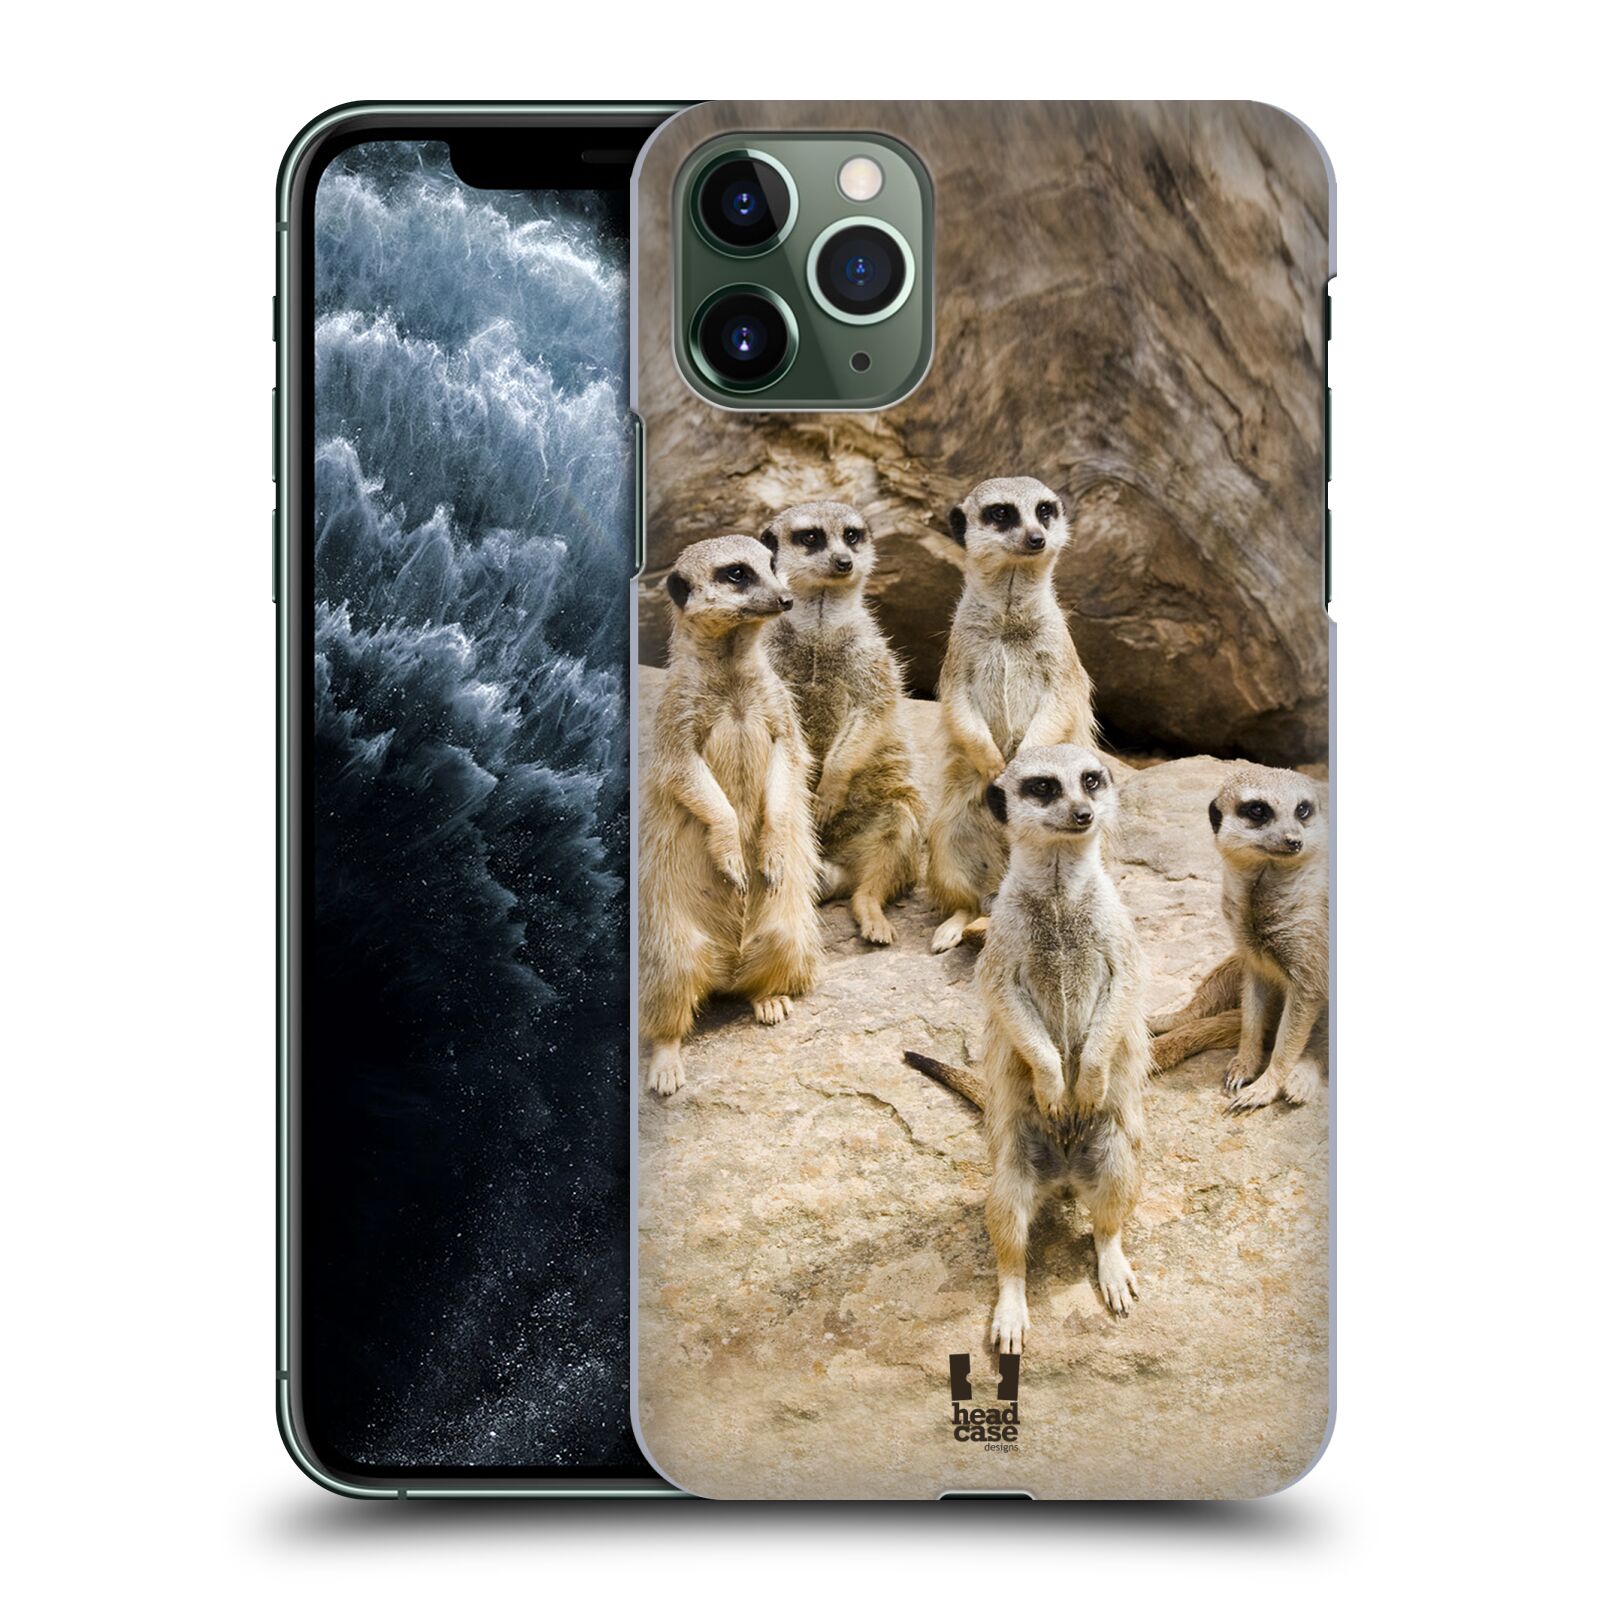 Pouzdro na mobil Apple Iphone 11 PRO MAX - HEAD CASE - vzor Divočina, Divoký život a zvířata foto SURIKATA